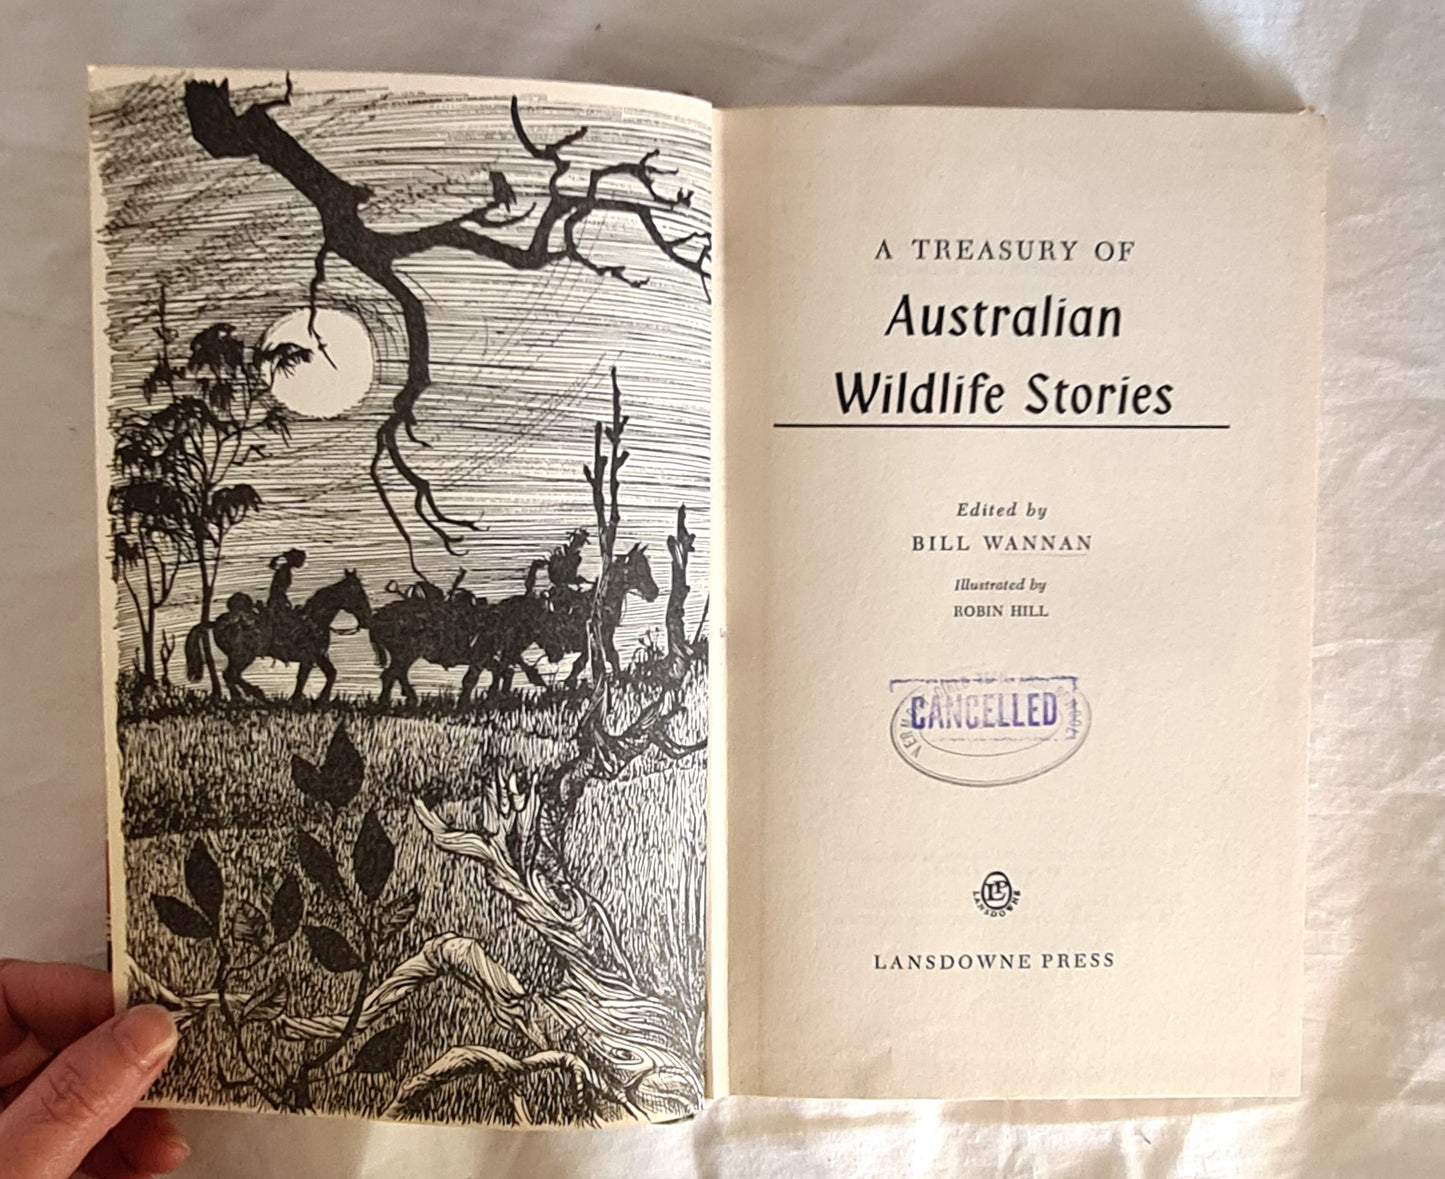 A Treasury of Australian Wildlife Stories by Bill Wannan